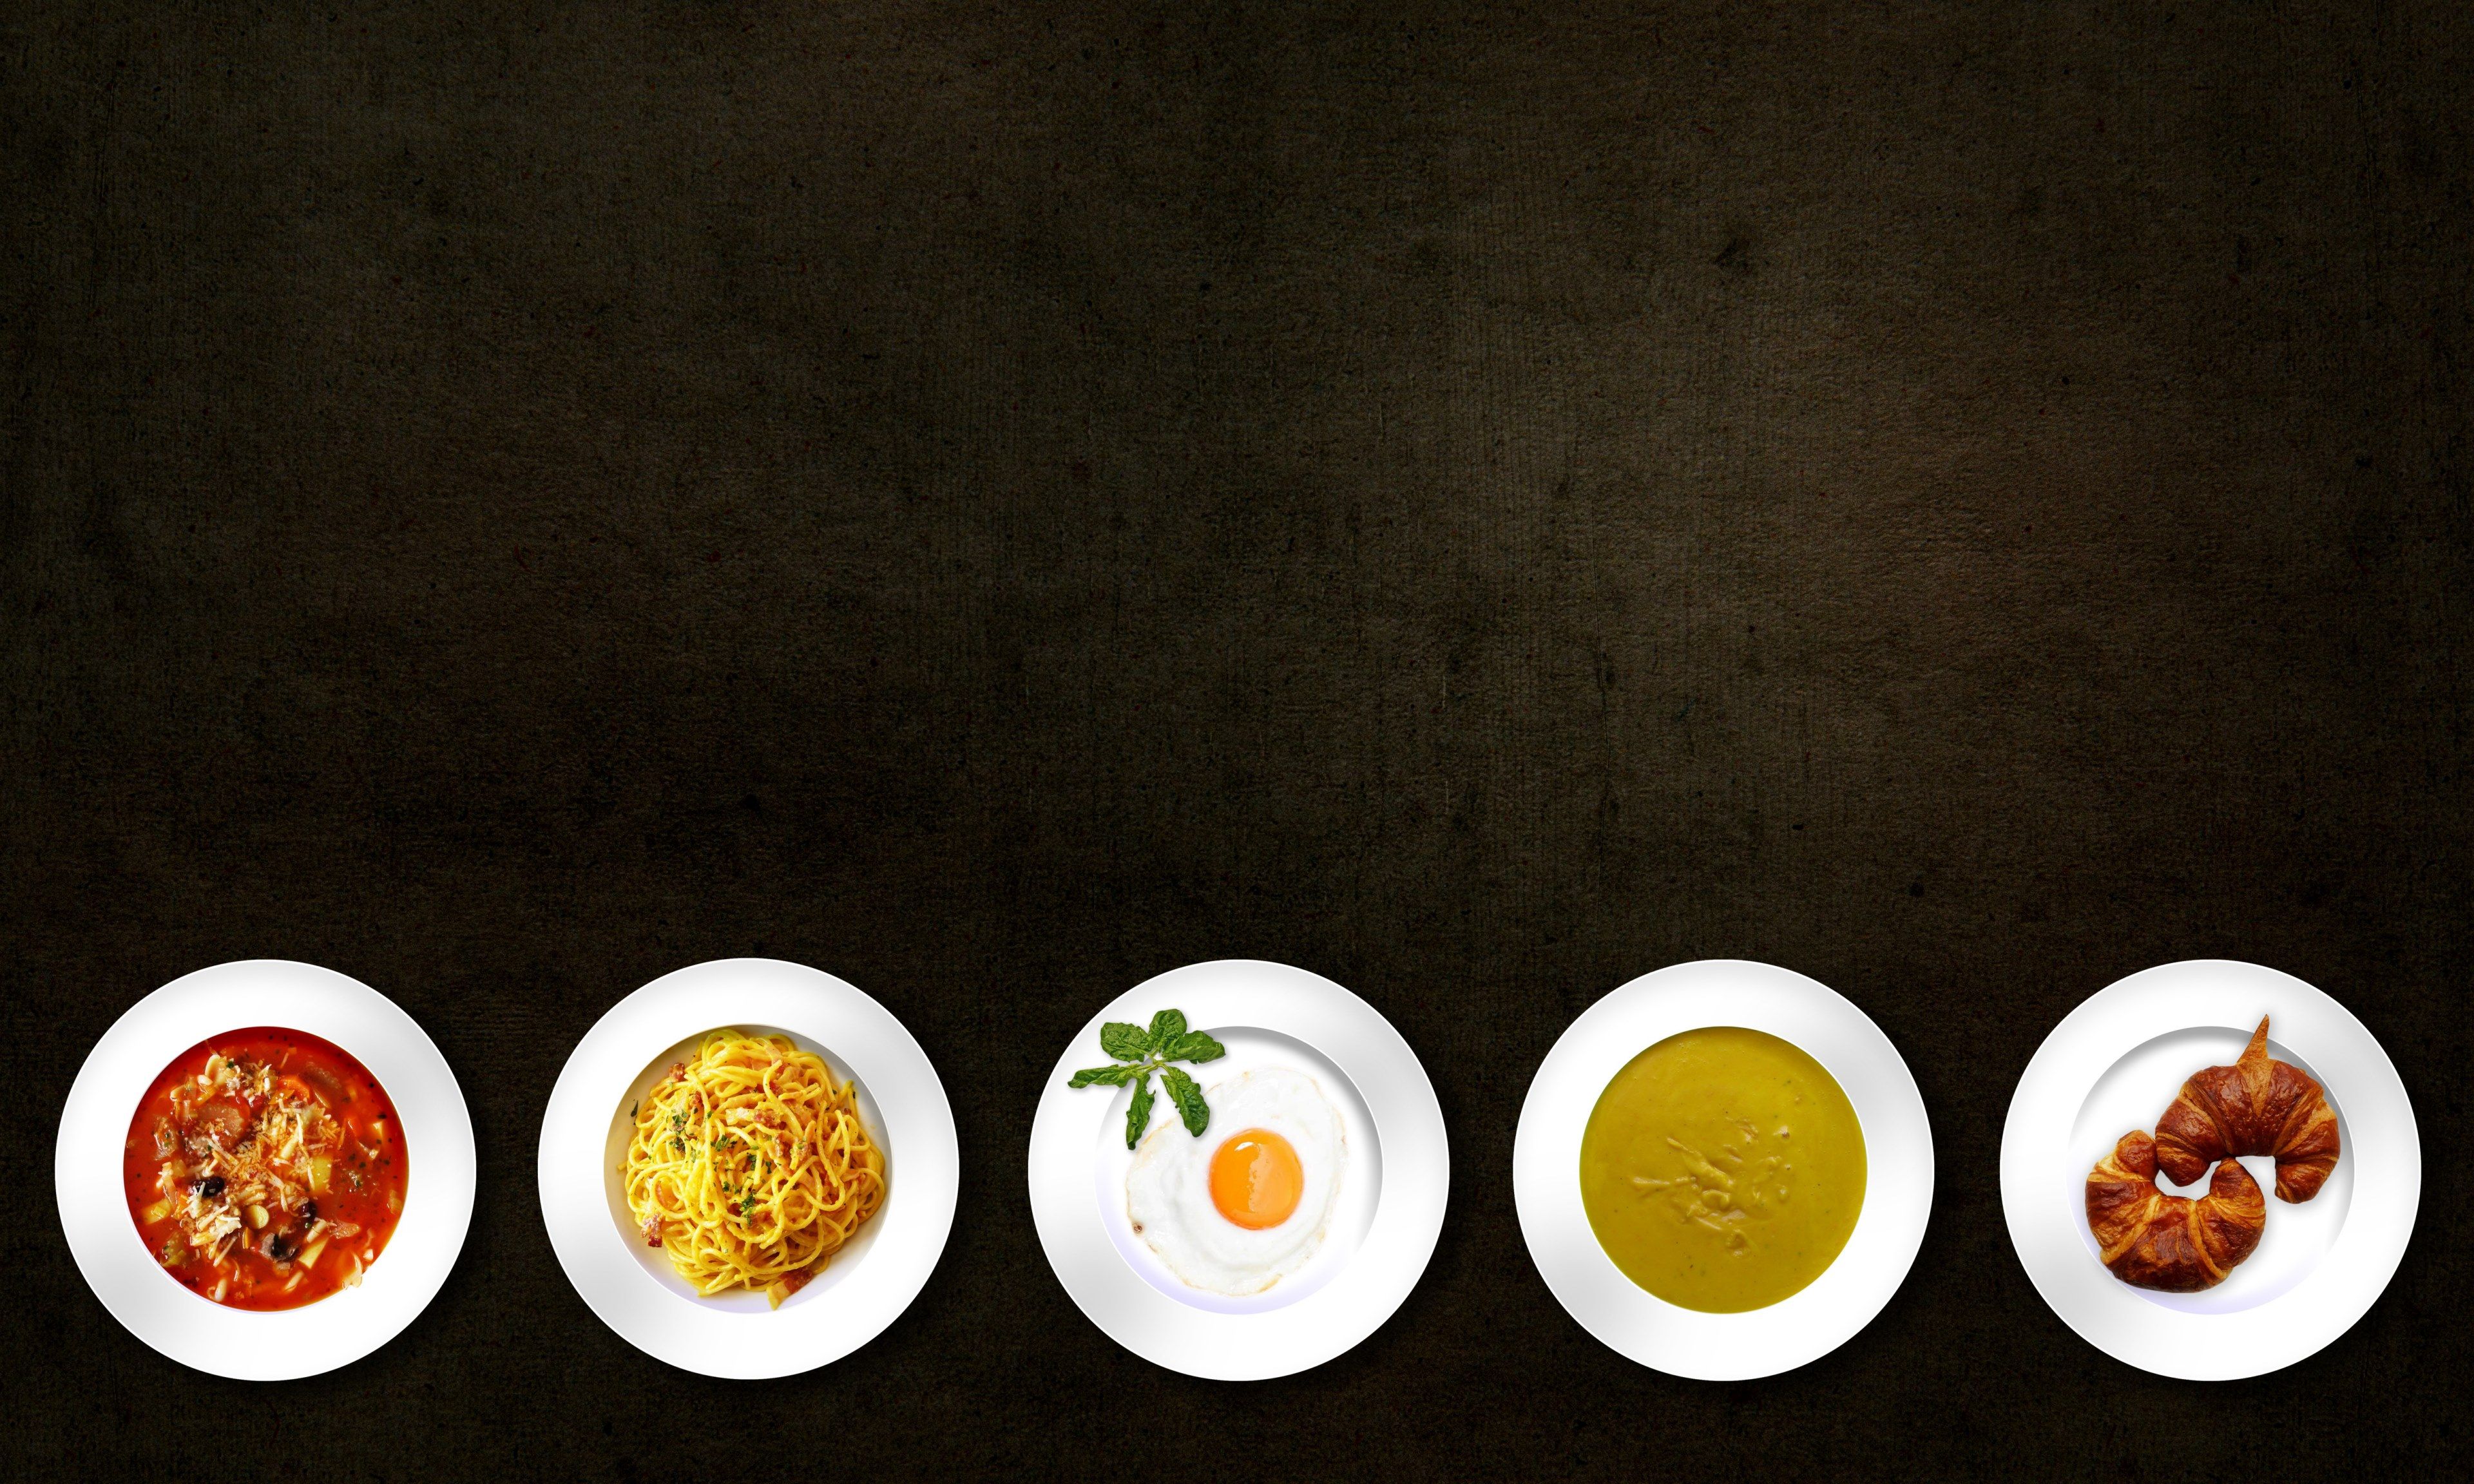 Wallpaper / cook food kitchen eat kitchen image background 4k wallpaper